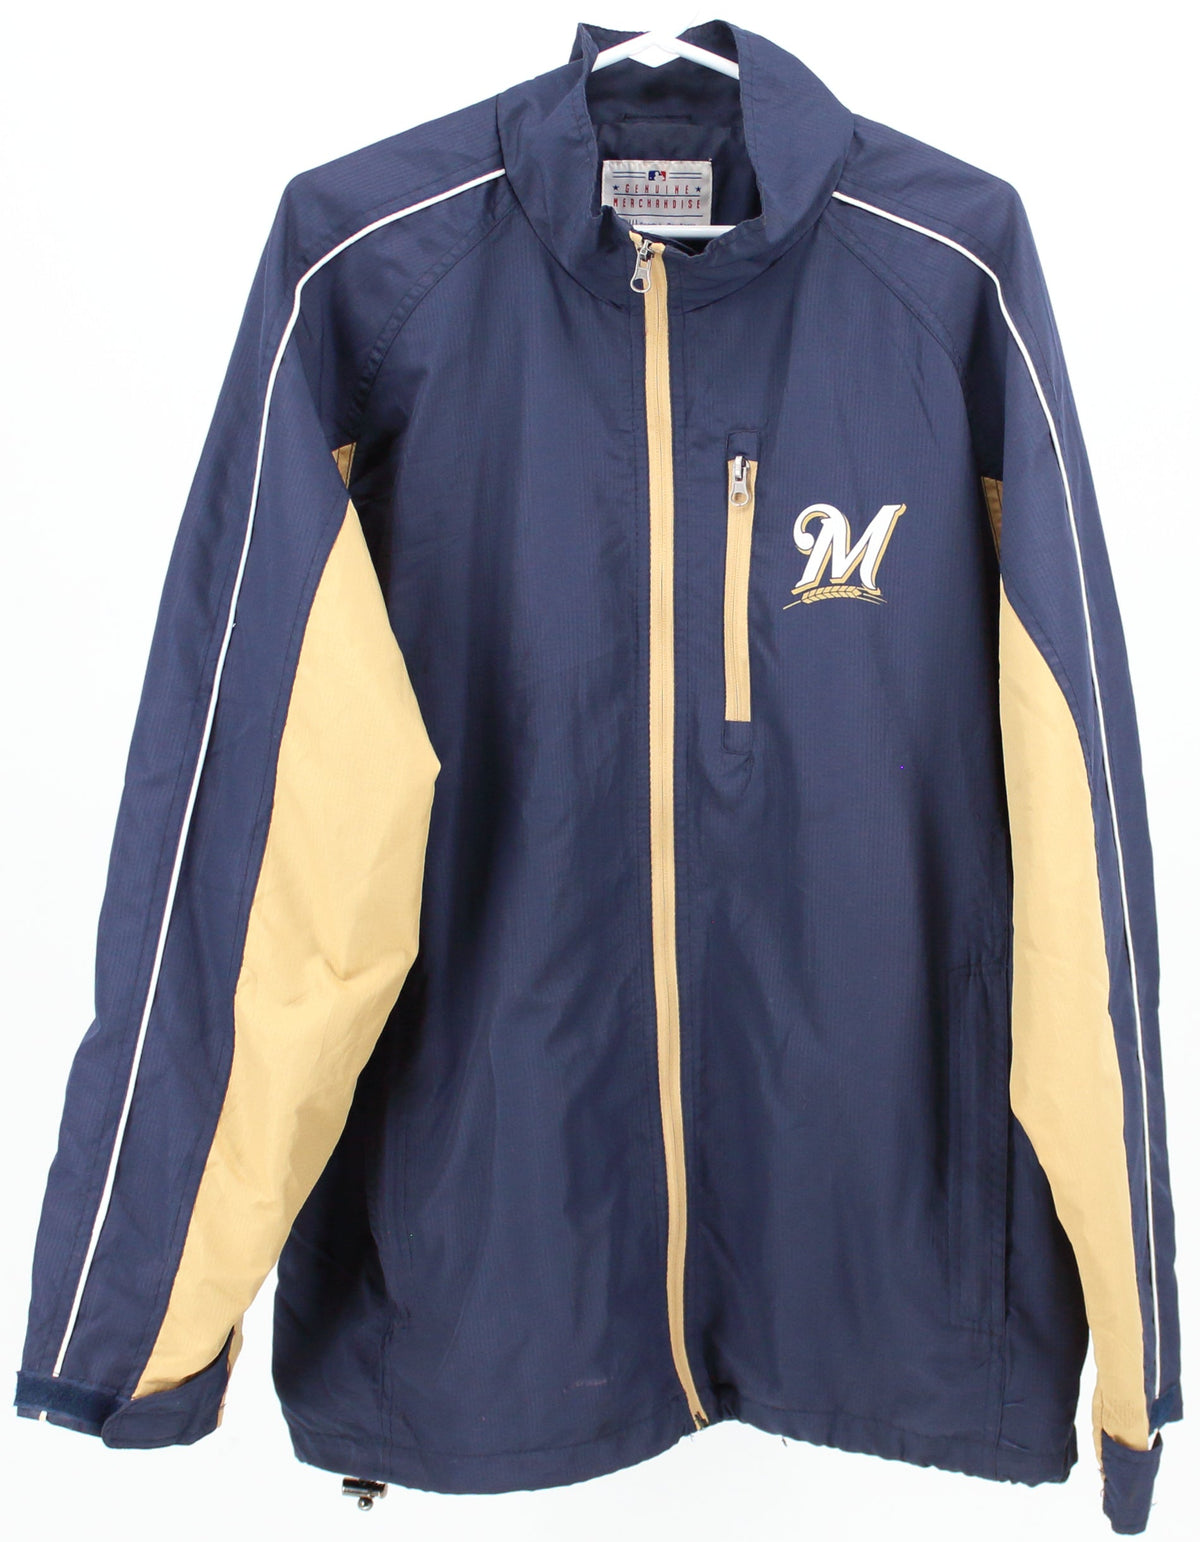 Genuine Merchandise Sports by Carl Banks Milwaukee Brewers Jacket